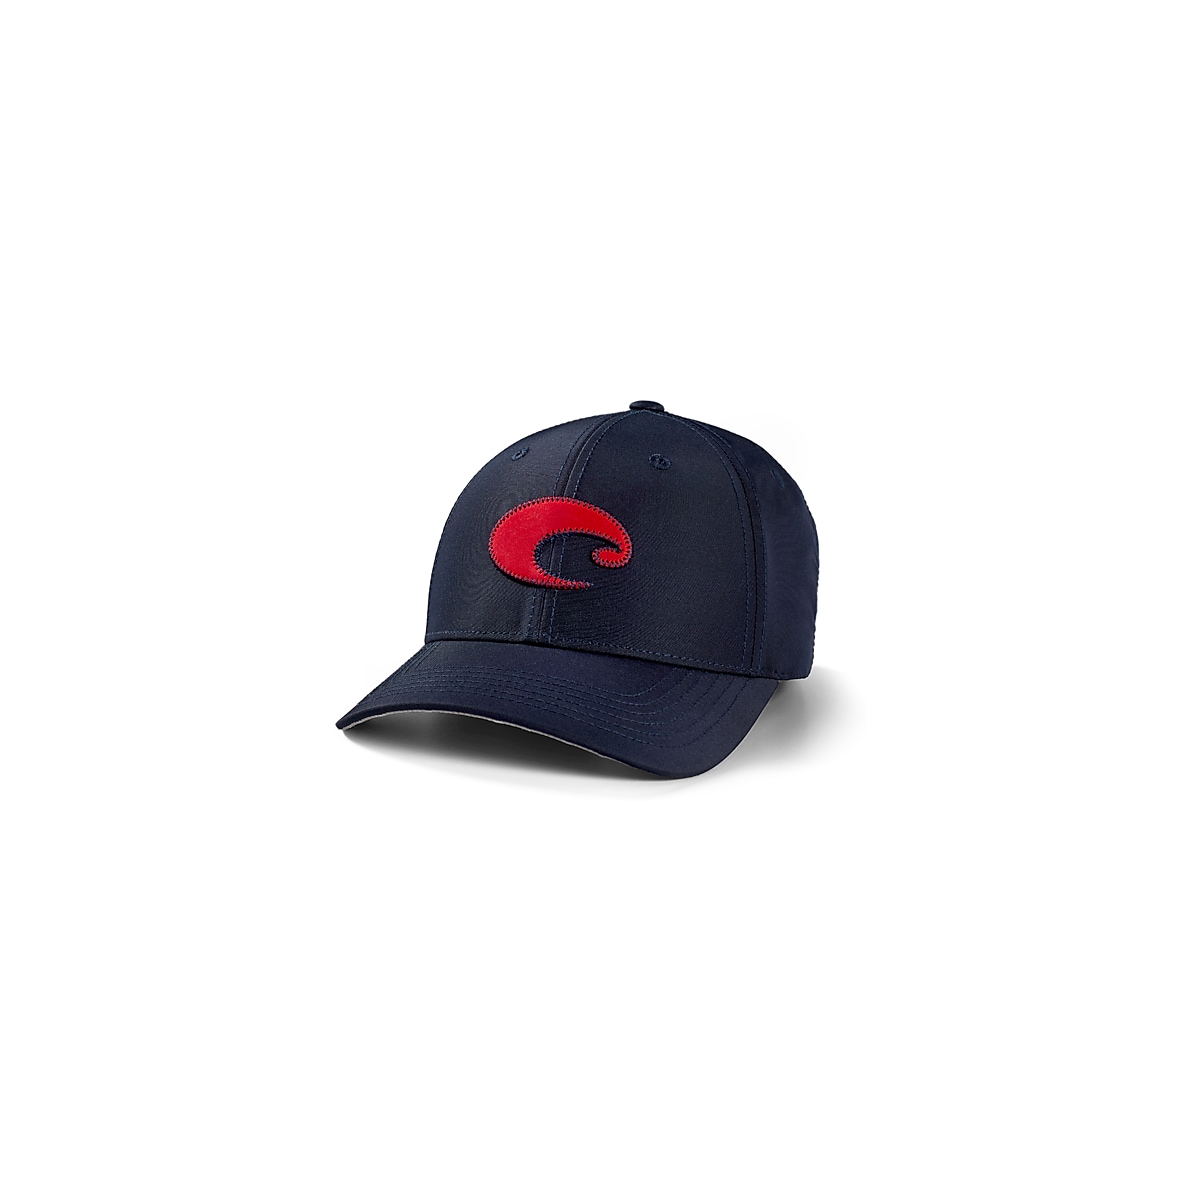 Costa Neo Performance Hat Light Blue Baseball Brim Fishing Sporting  Adjustable